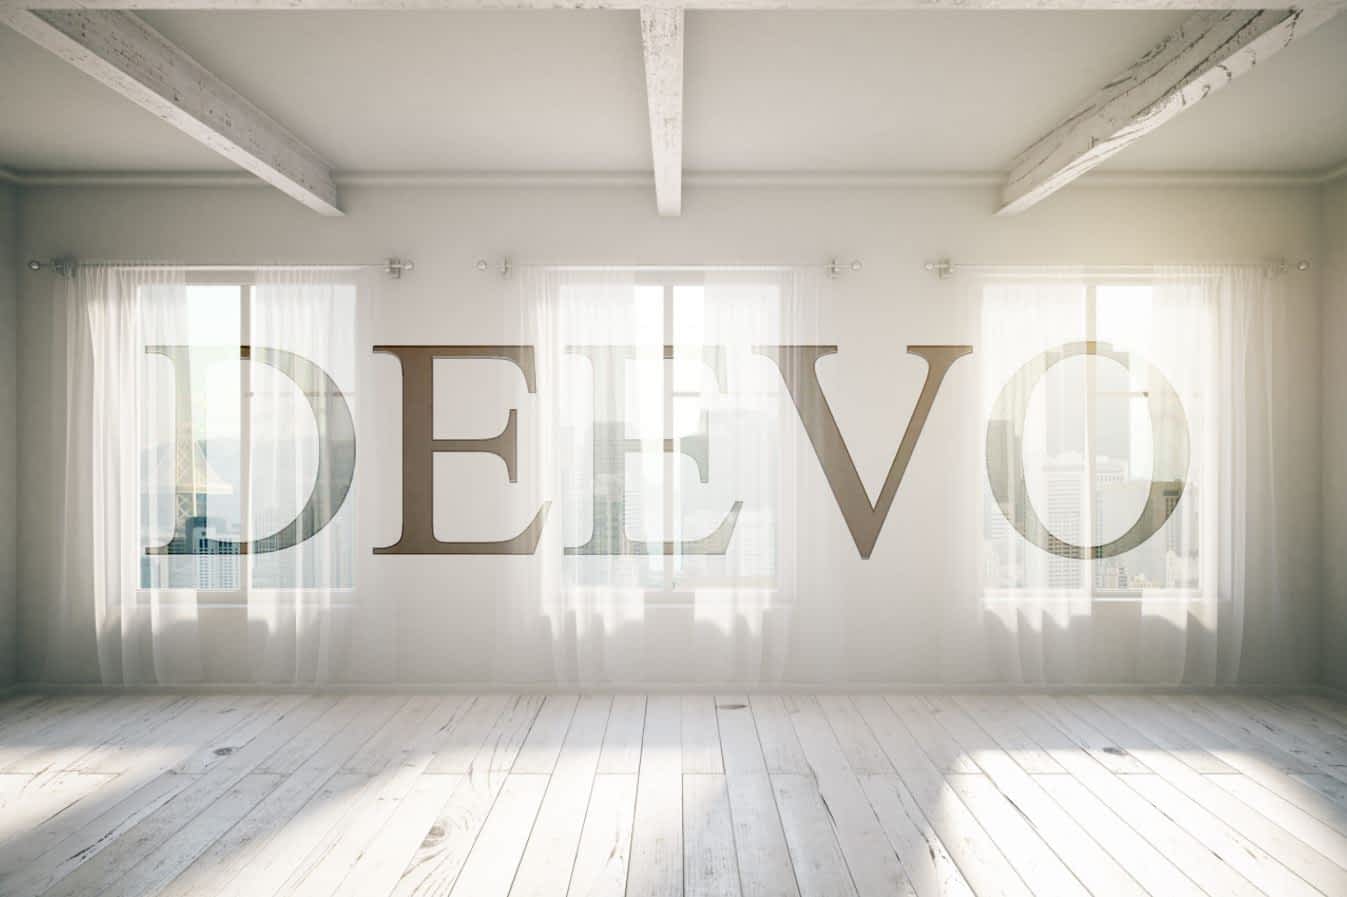 deevo_over_ons